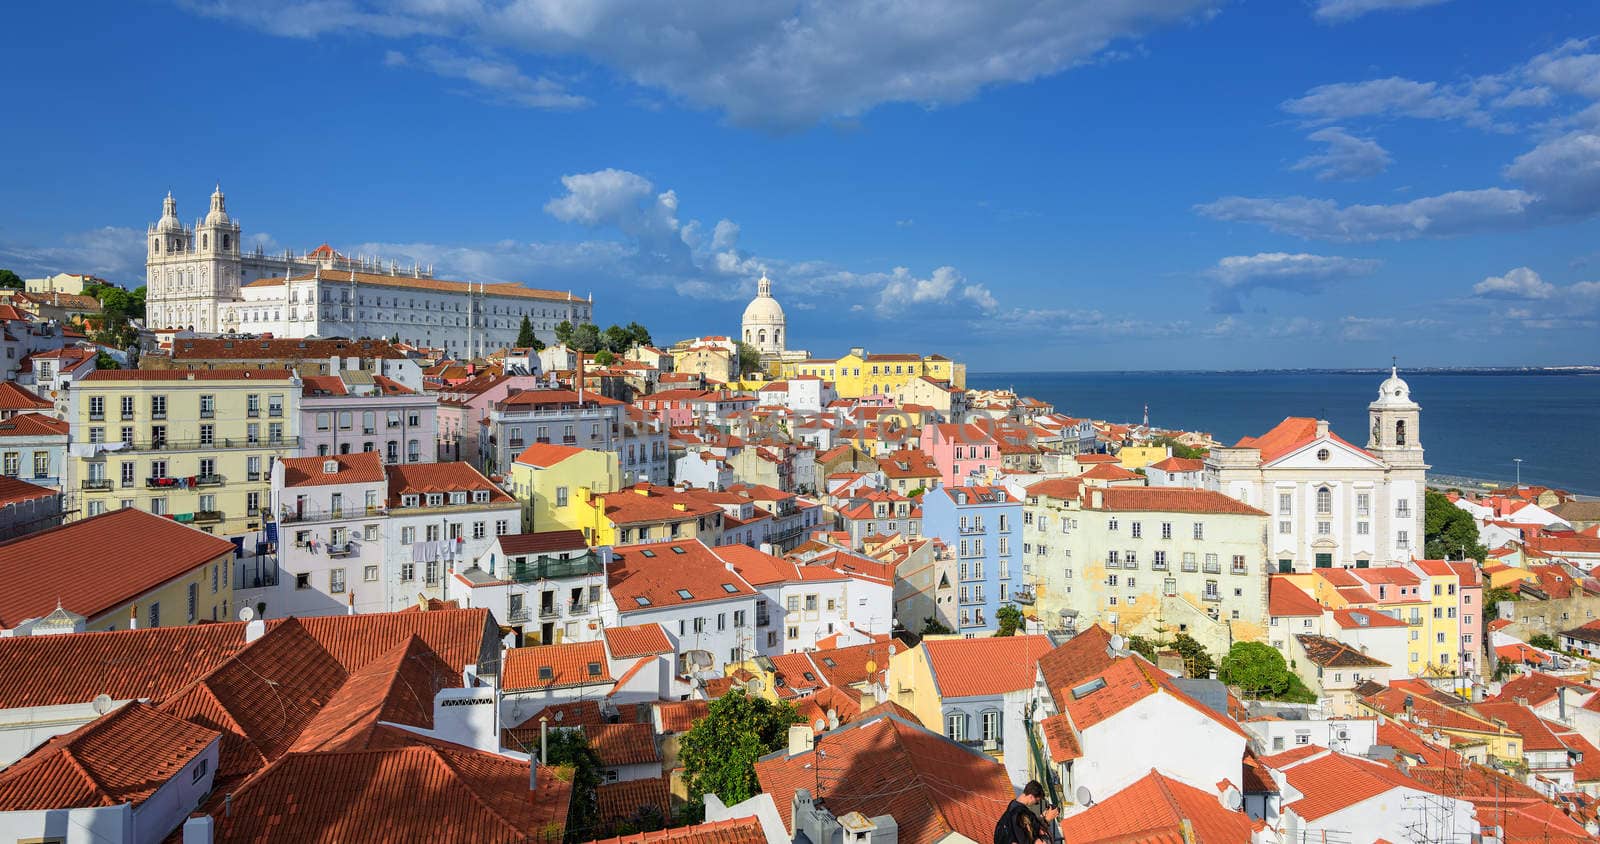 Panoramic view of Alfama quarter, Lisbon, Portugal by GlobePhotos